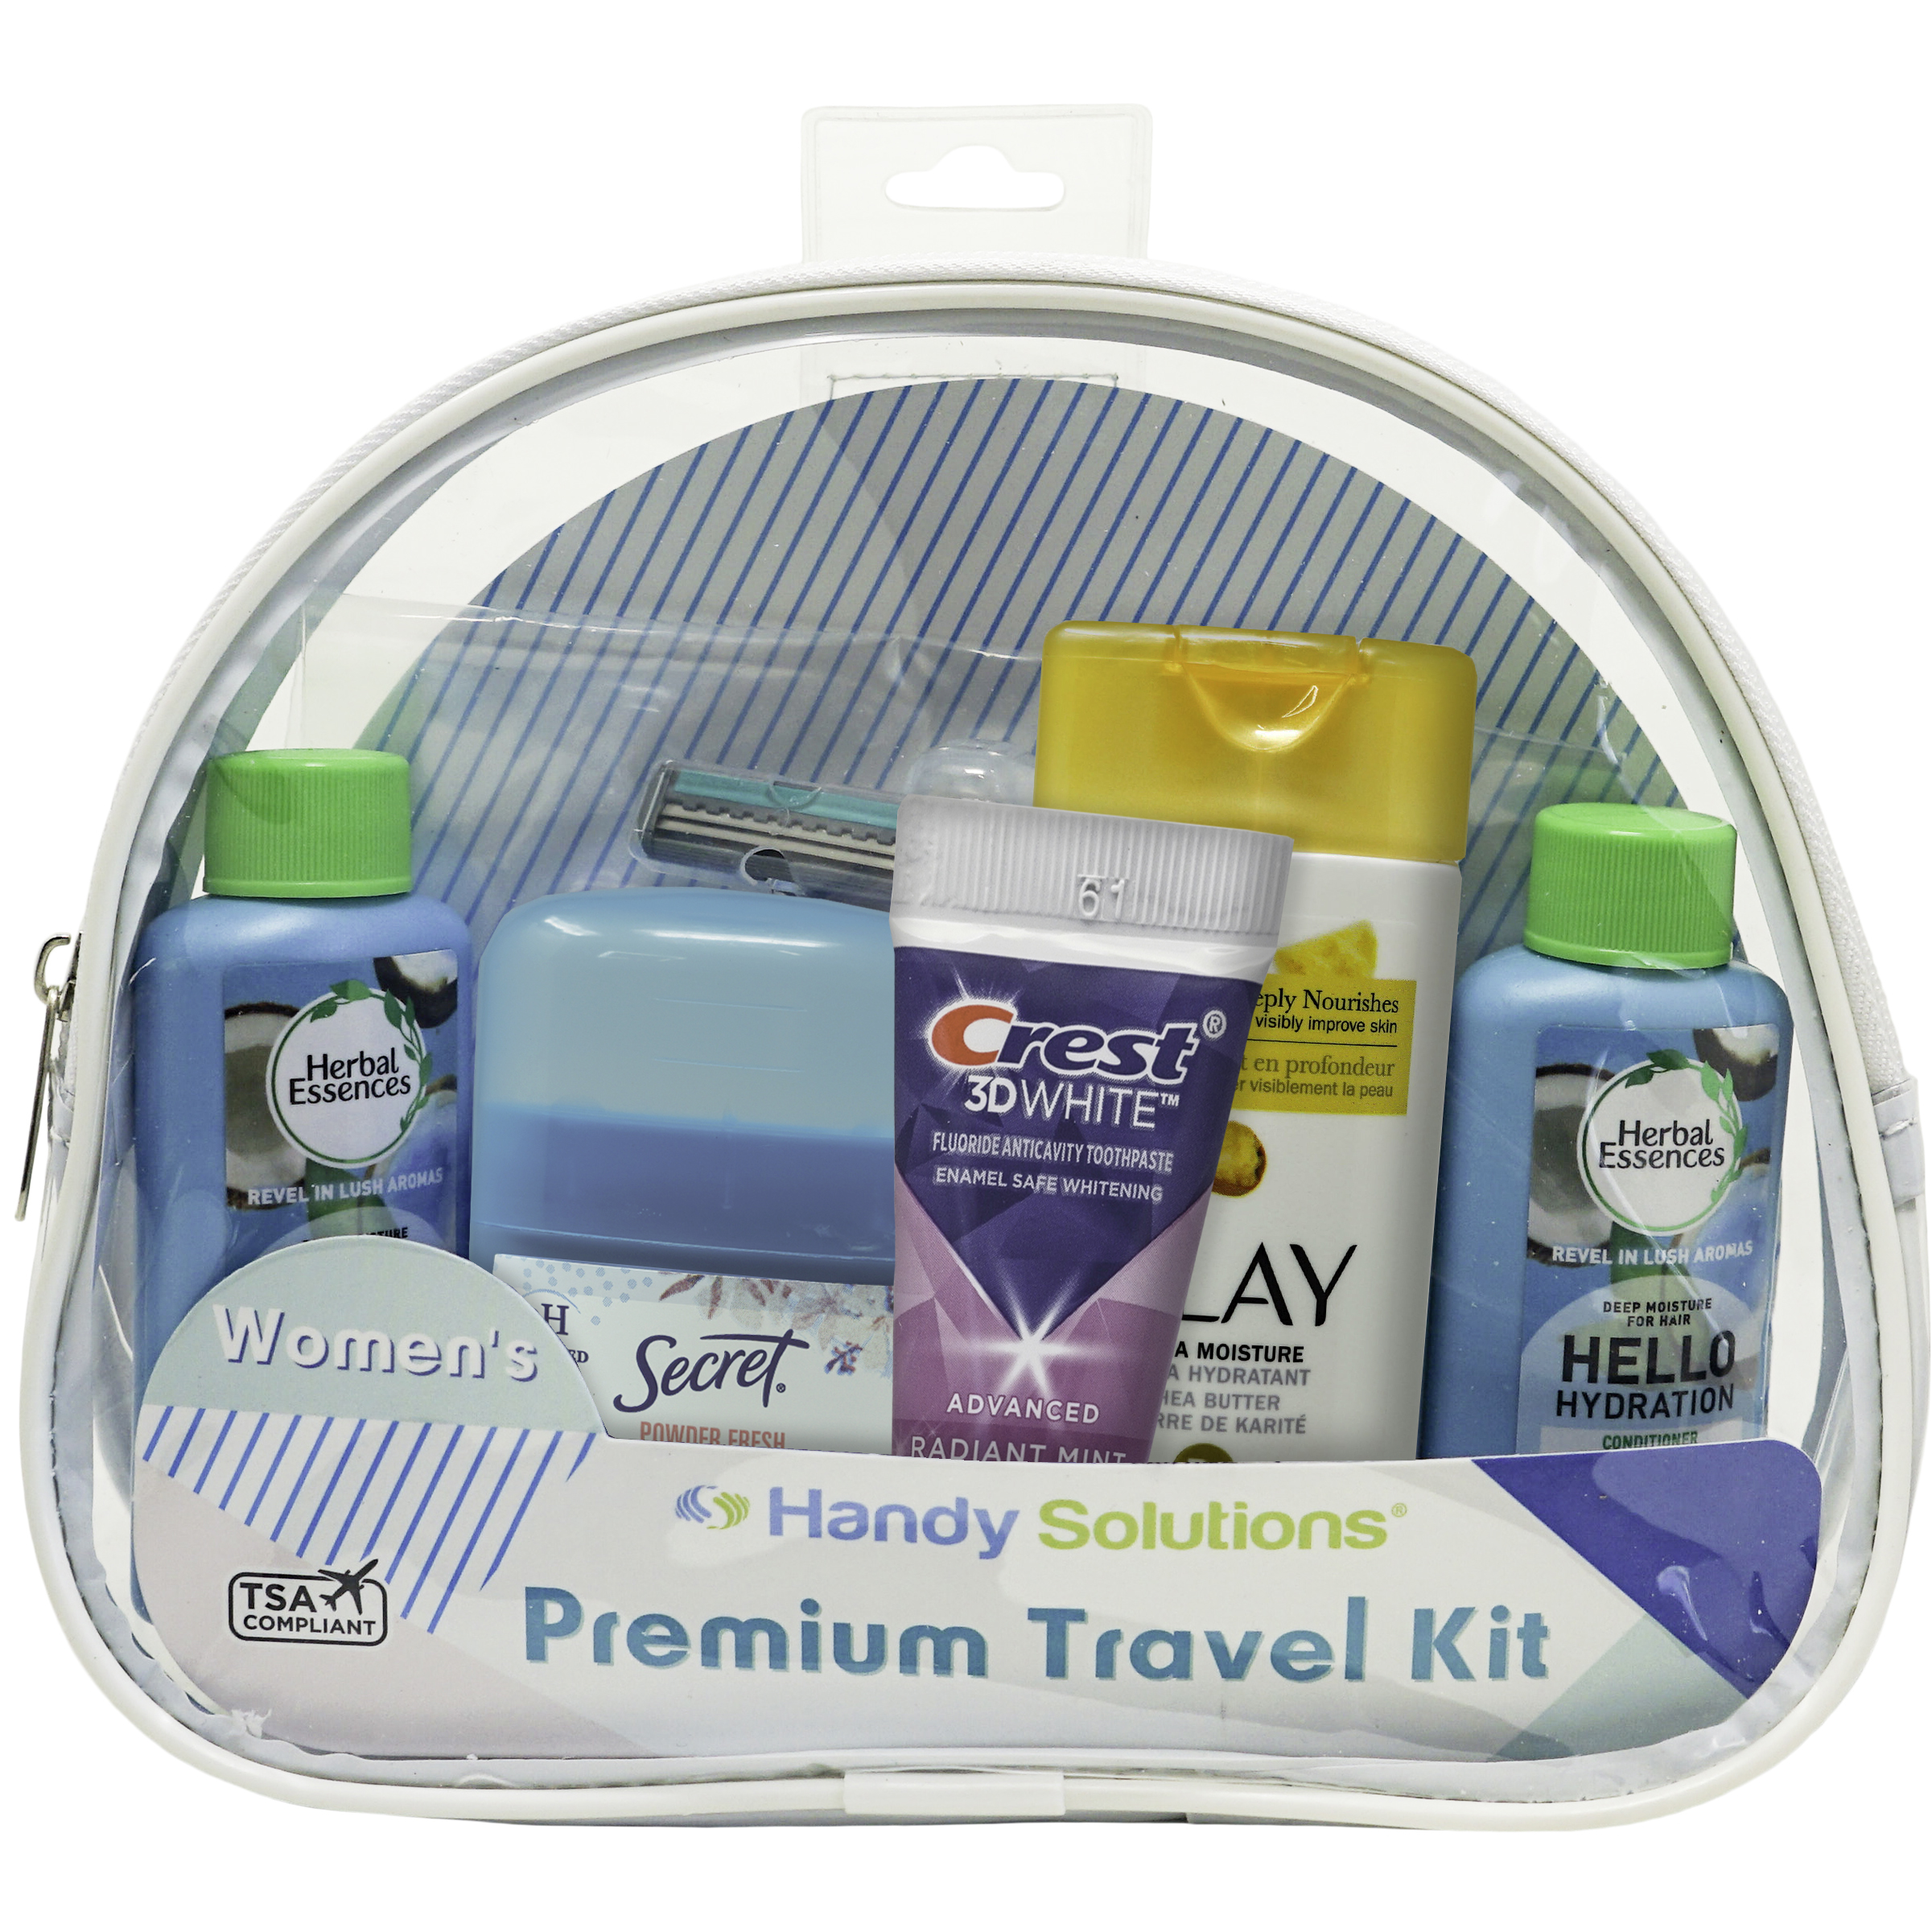 Handy Solutions Premium Travel Kit, Women's